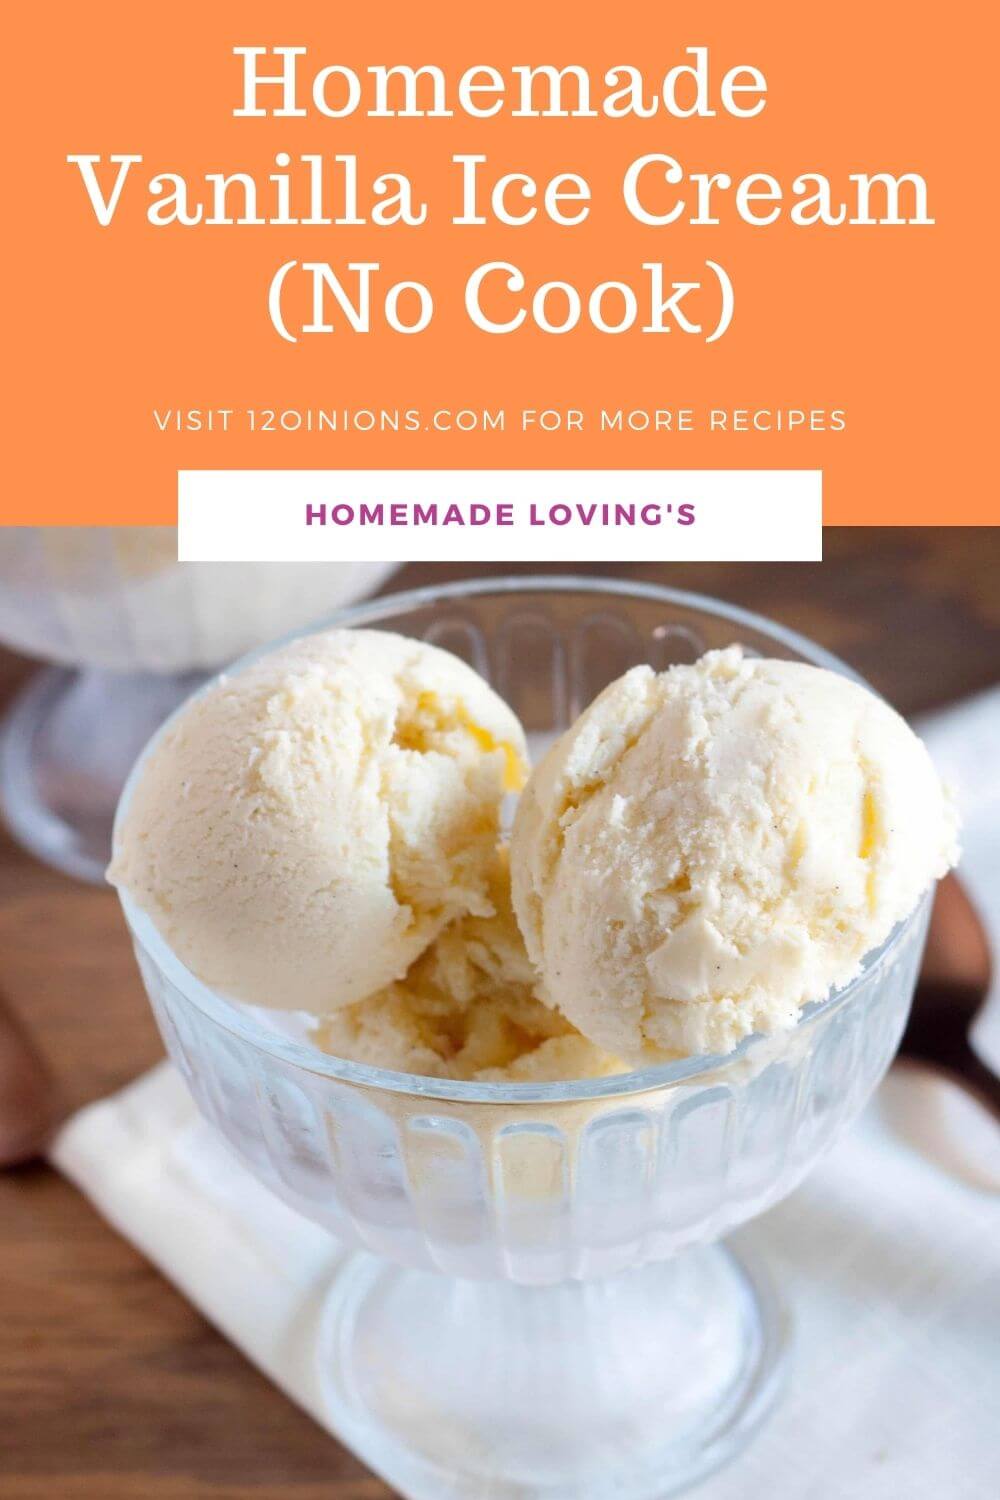 Homemade Vanilla Ice Cream (No Cook)